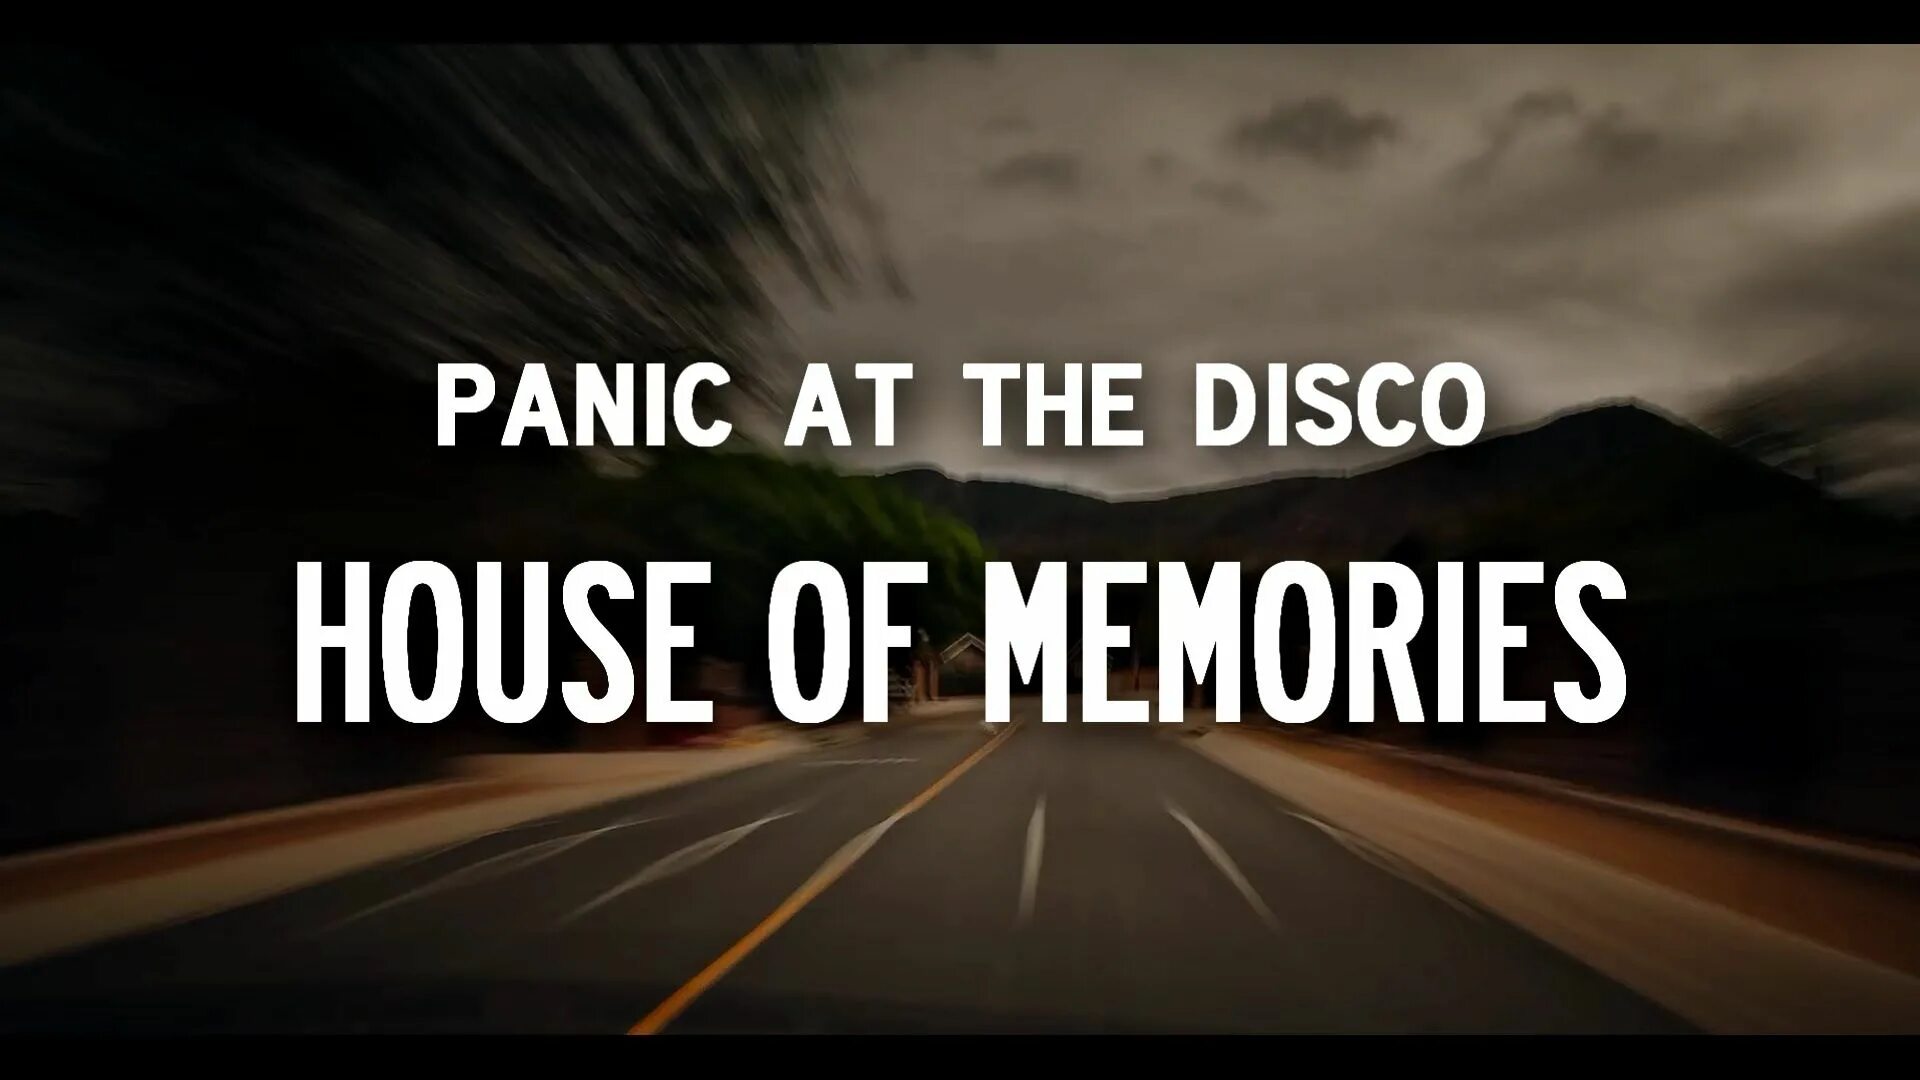 House of Memories Panic at the Disco. Panic of Disco!-House of Memories. House of m. Panic at the Disco House of Memories обложка. Оф меморис песня